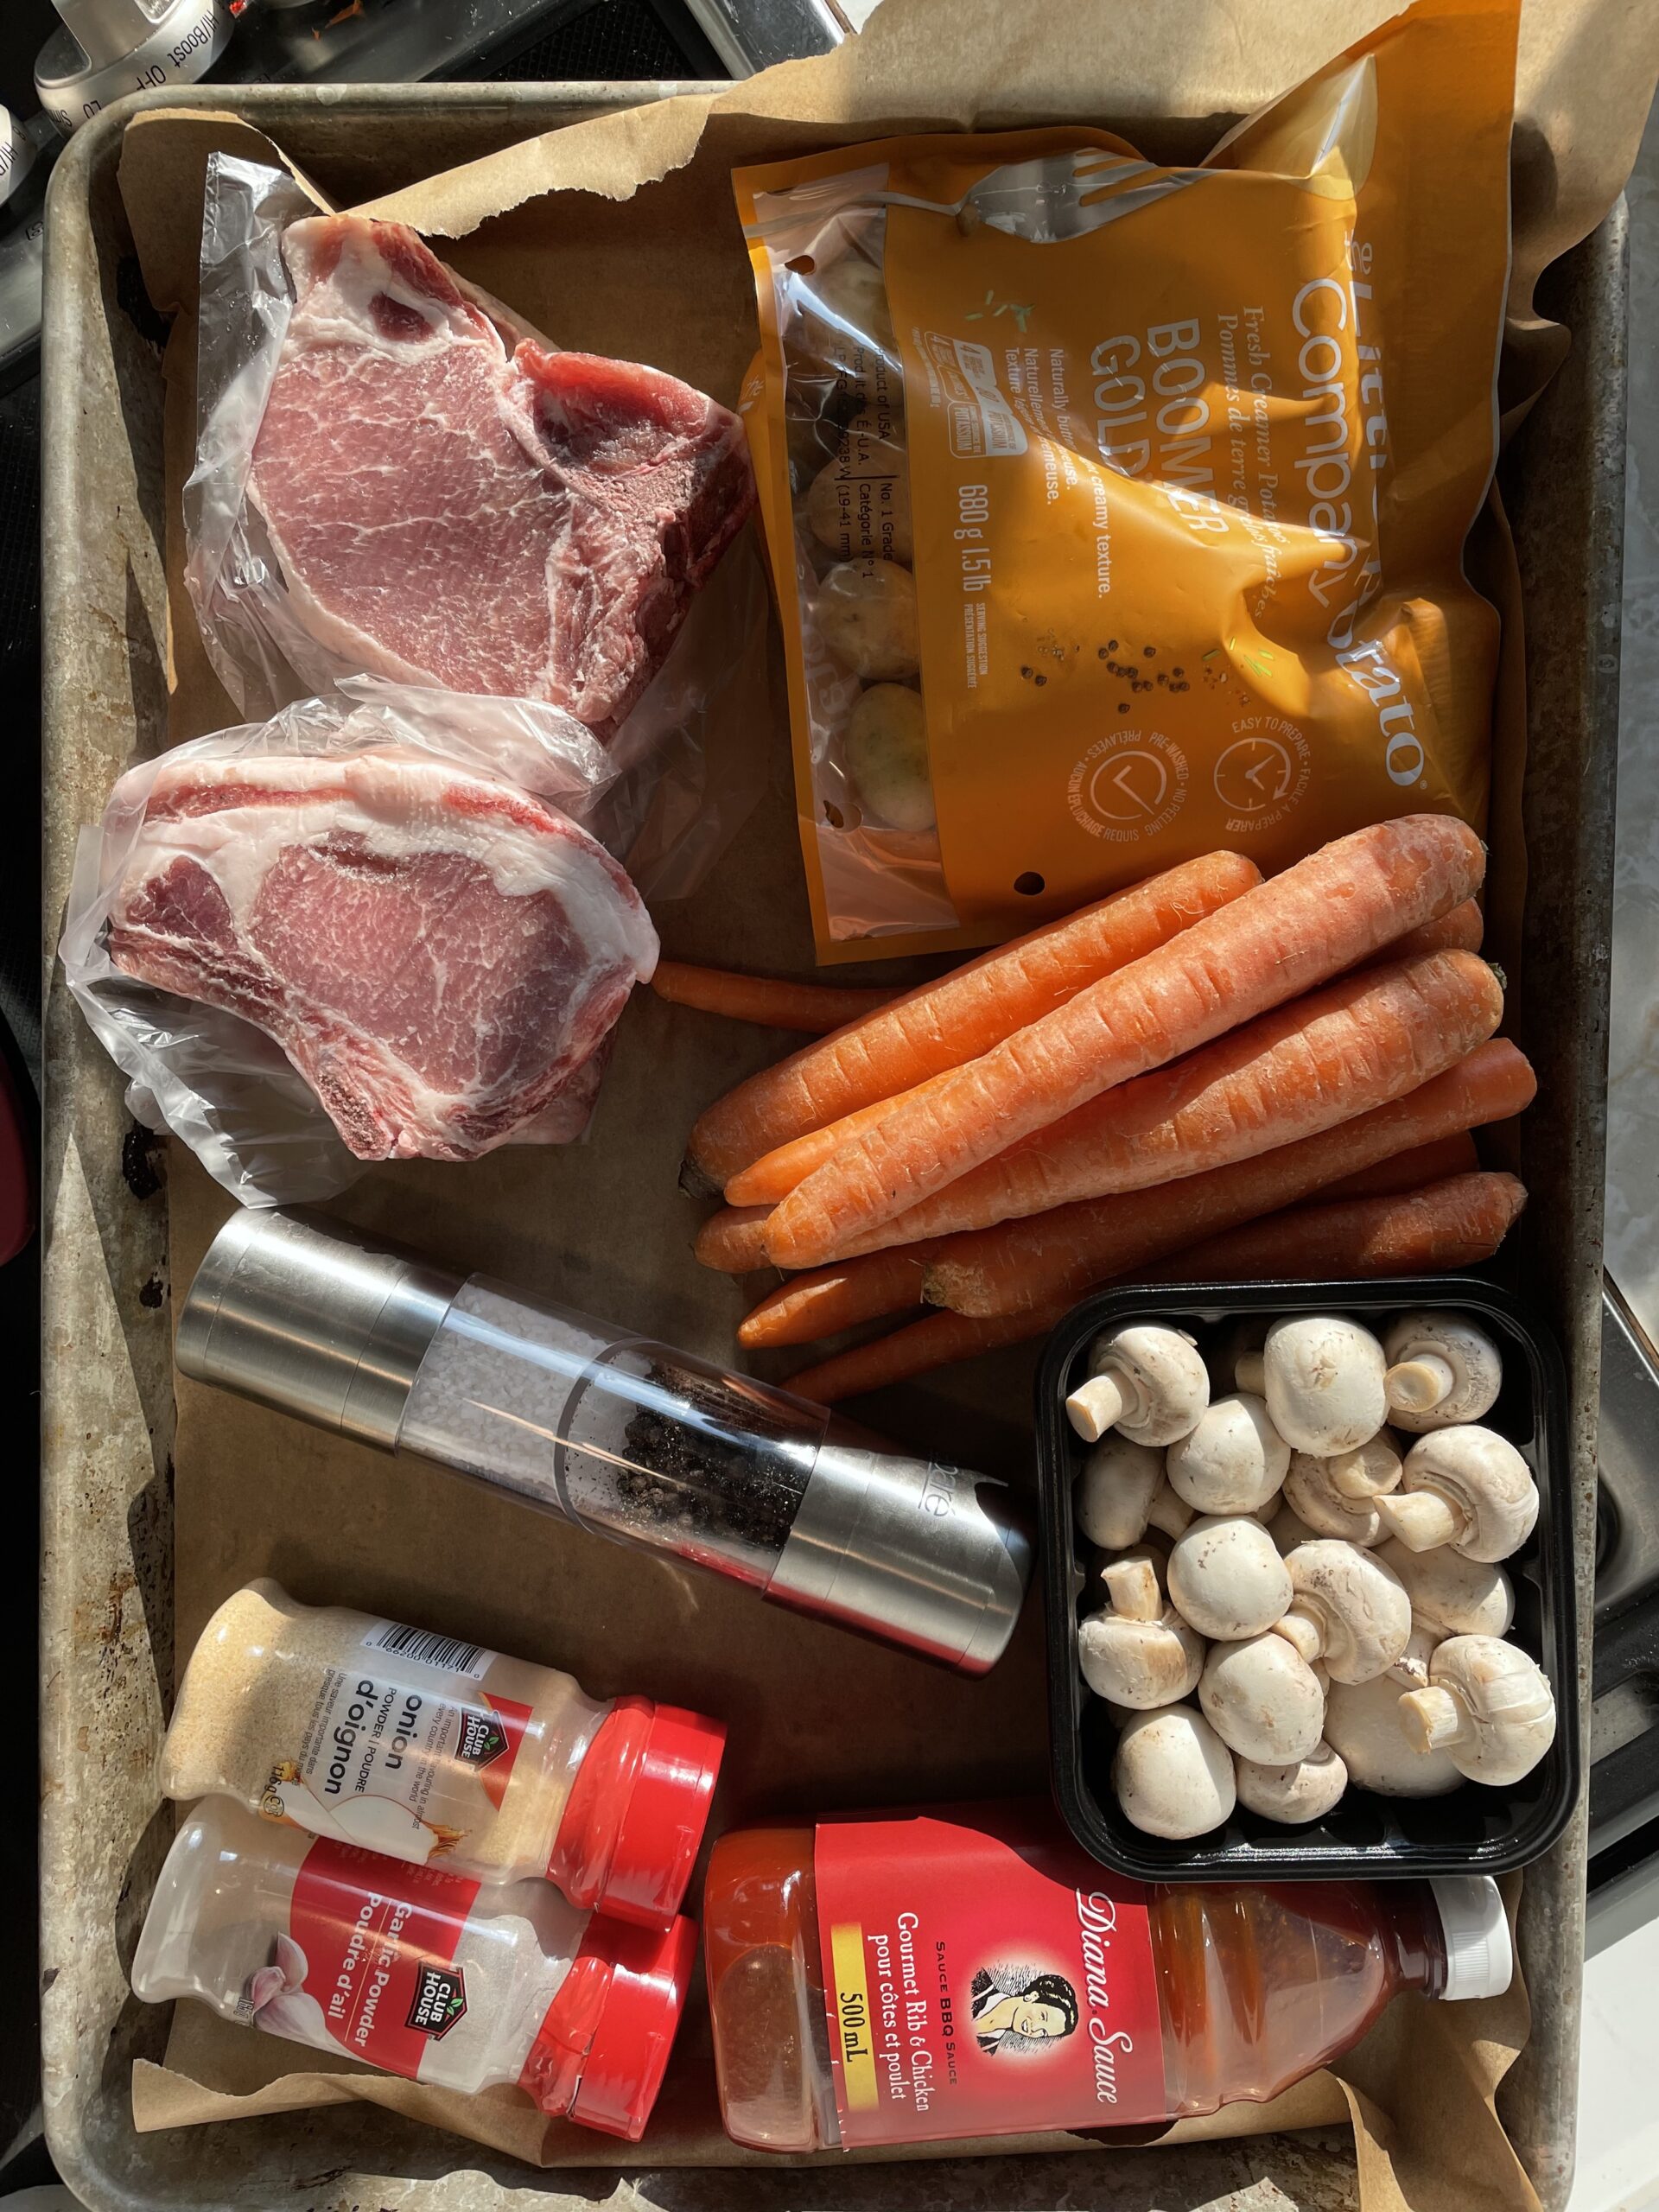 Ingredients On a sheetpan: potatoes, carrots, mushrooms, pepper and salt, seasonings, pork chops and pork chops 